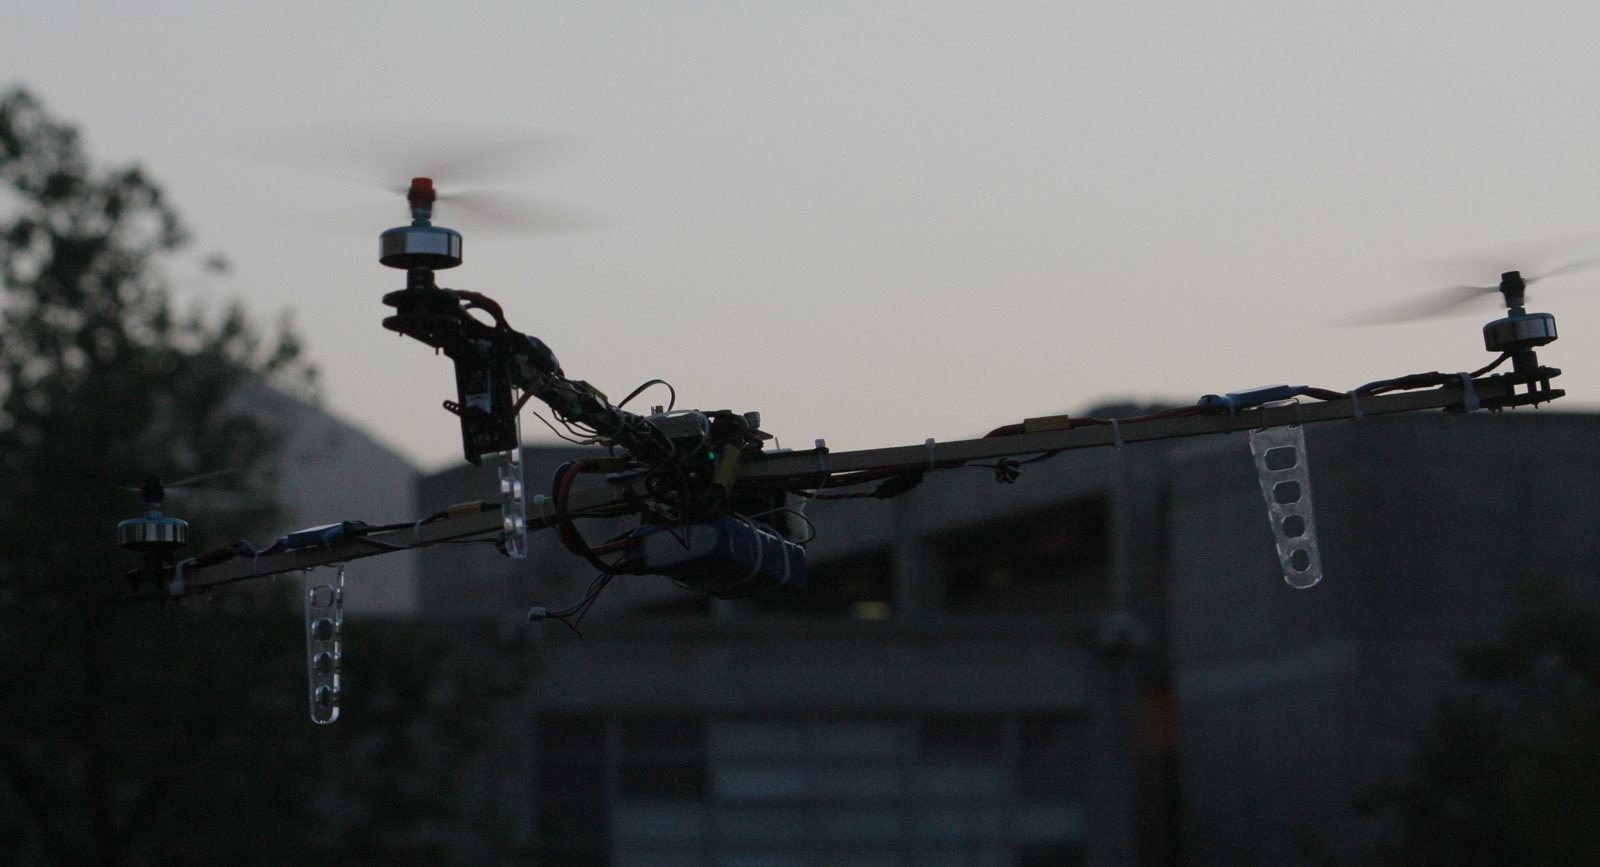 Tricopter during an evening flight